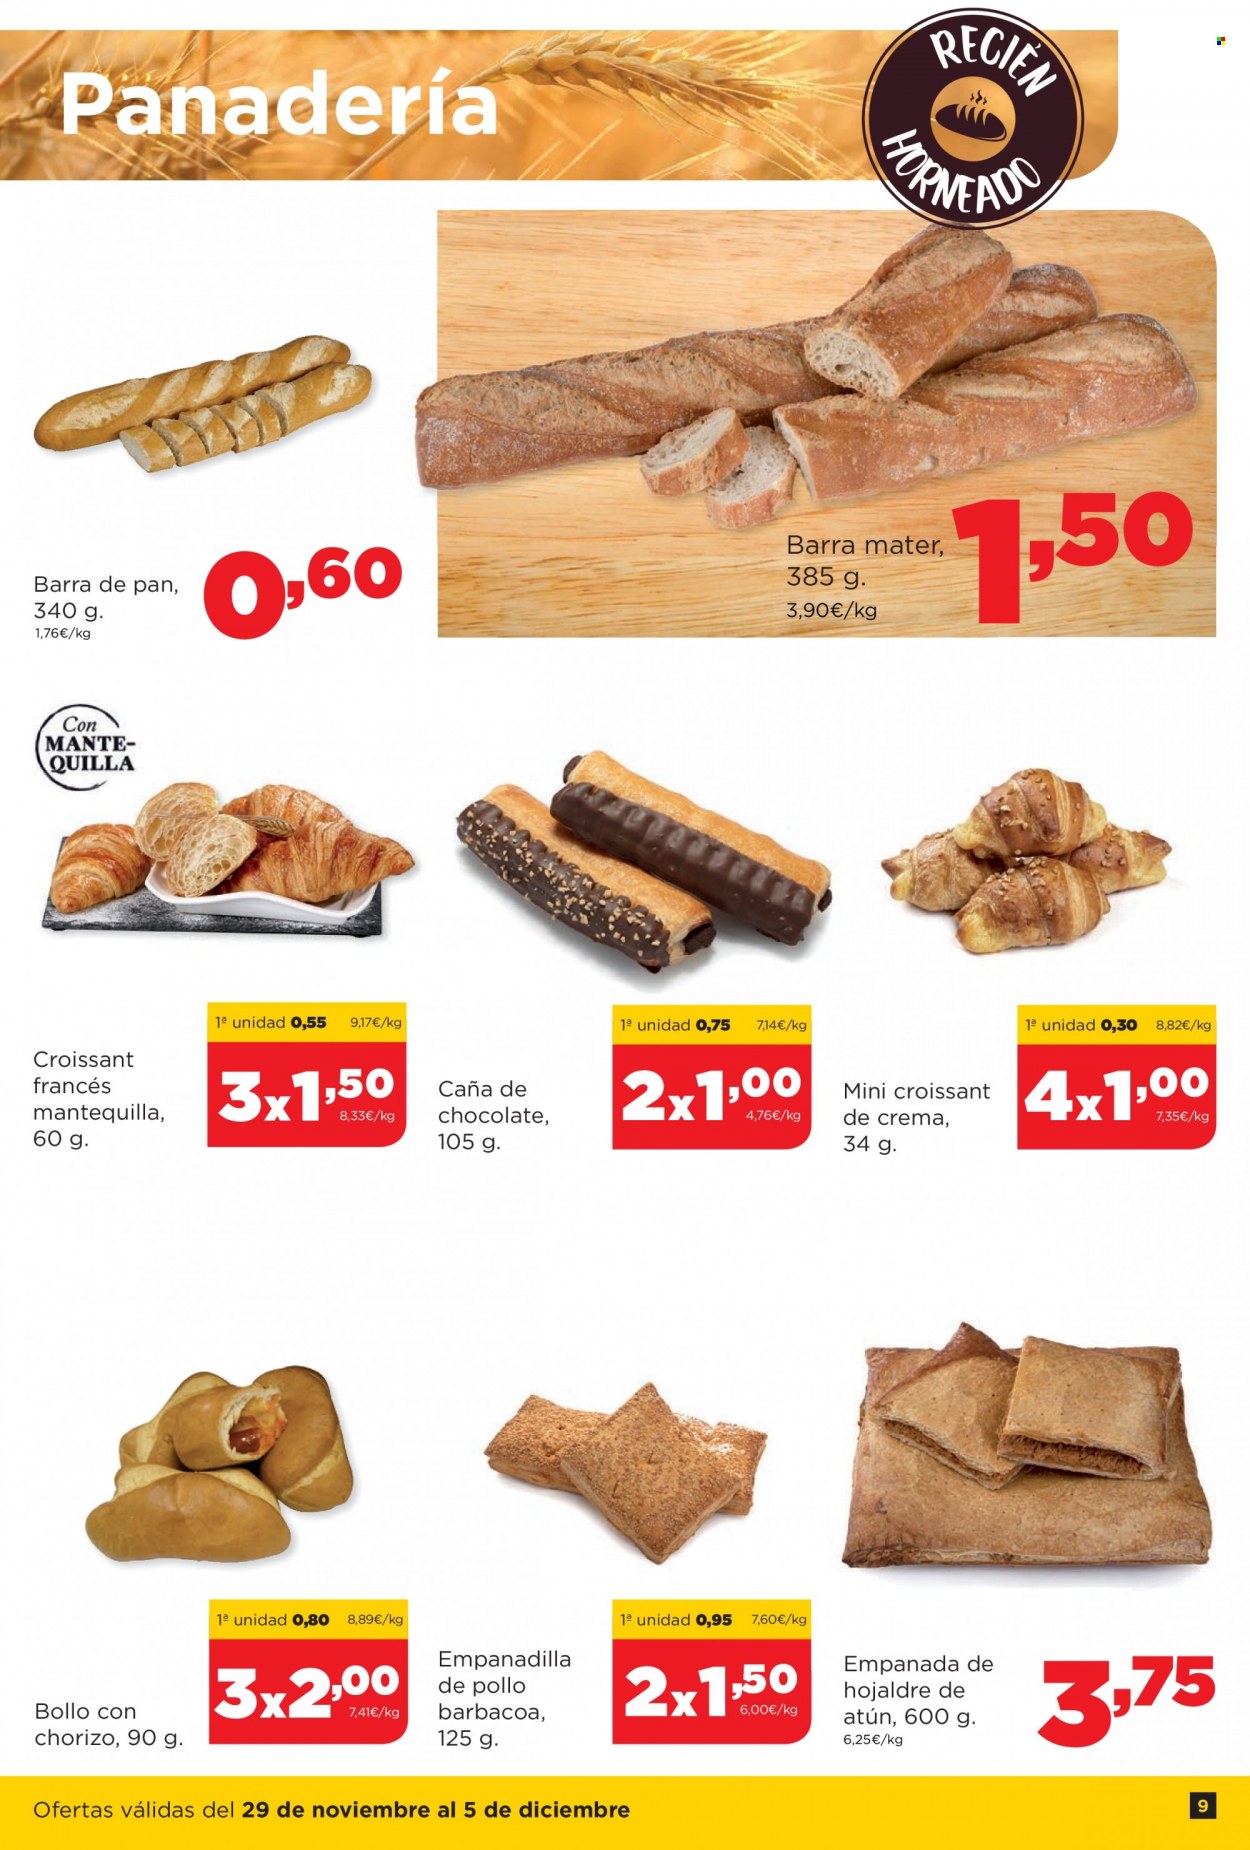 thumbnail - Folleto actual Alimerka - 29/11/21 - 05/12/21 - Ventas - empanada, hojaldre, croissant, chorizo. Página 9.